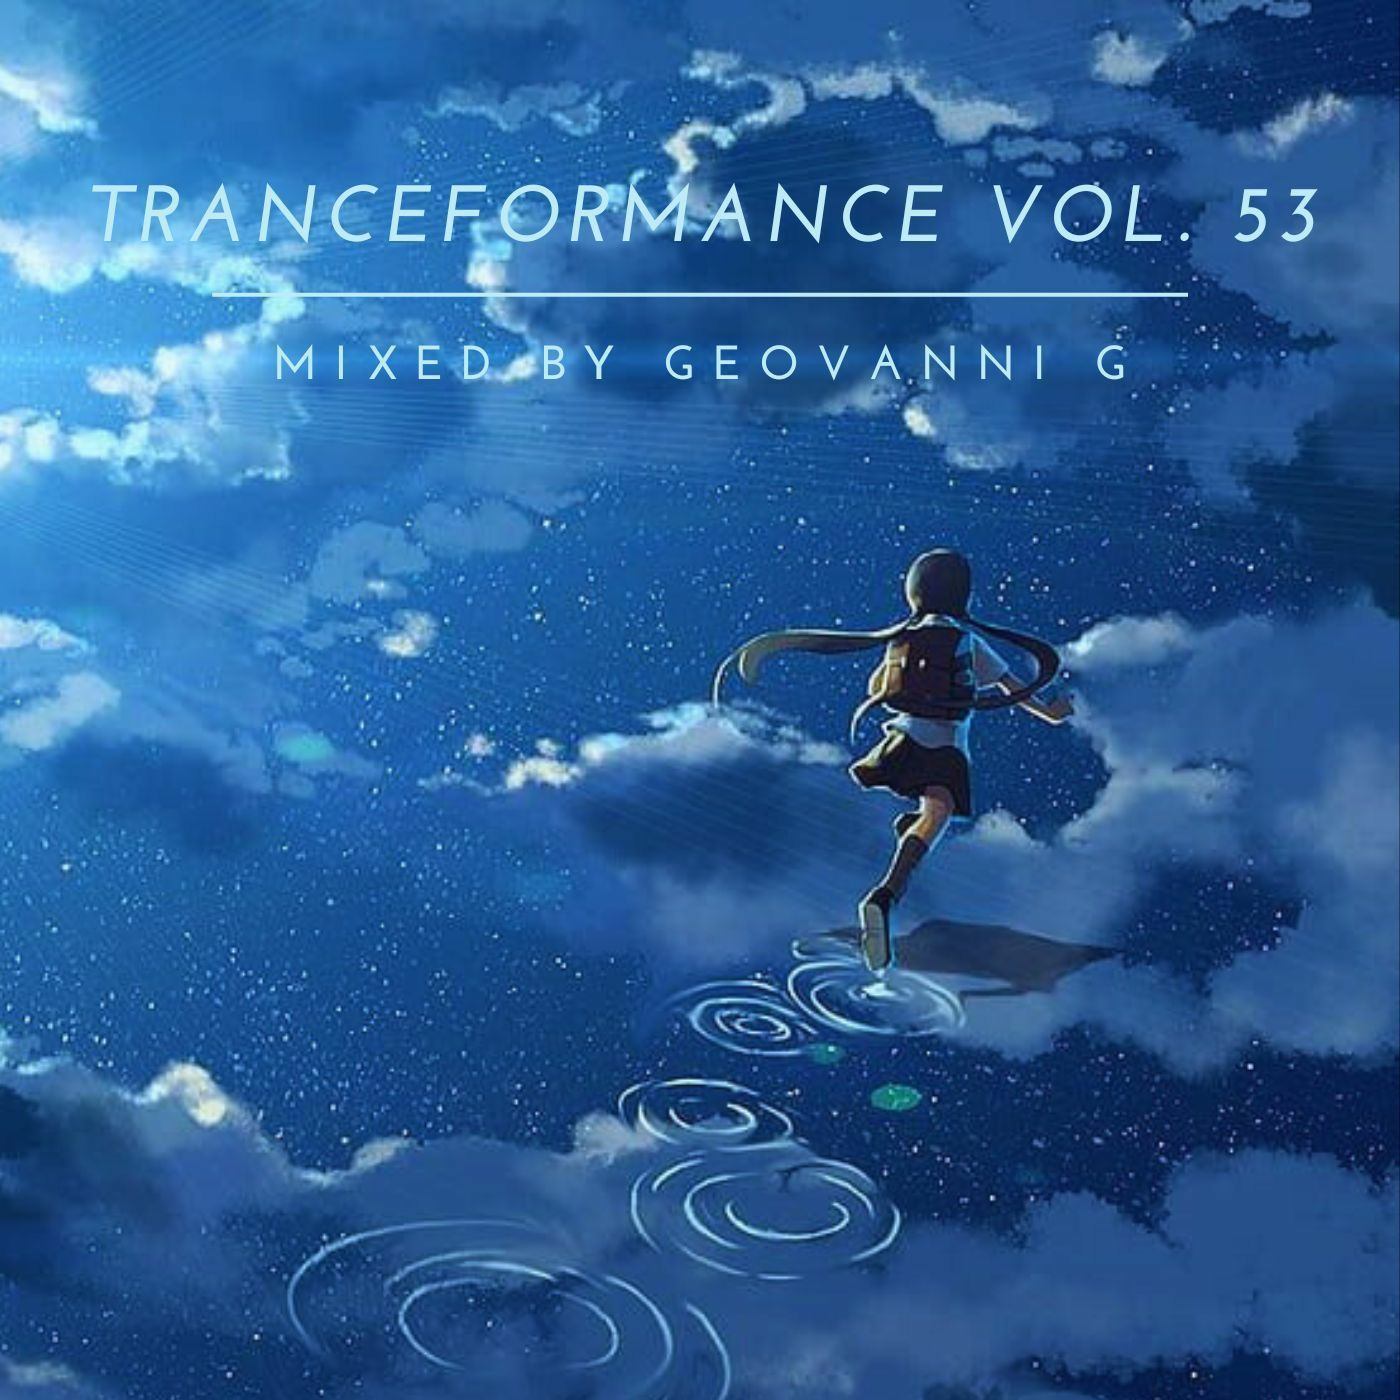 Tranceformance Vol. 53 mixed by Geovanni G